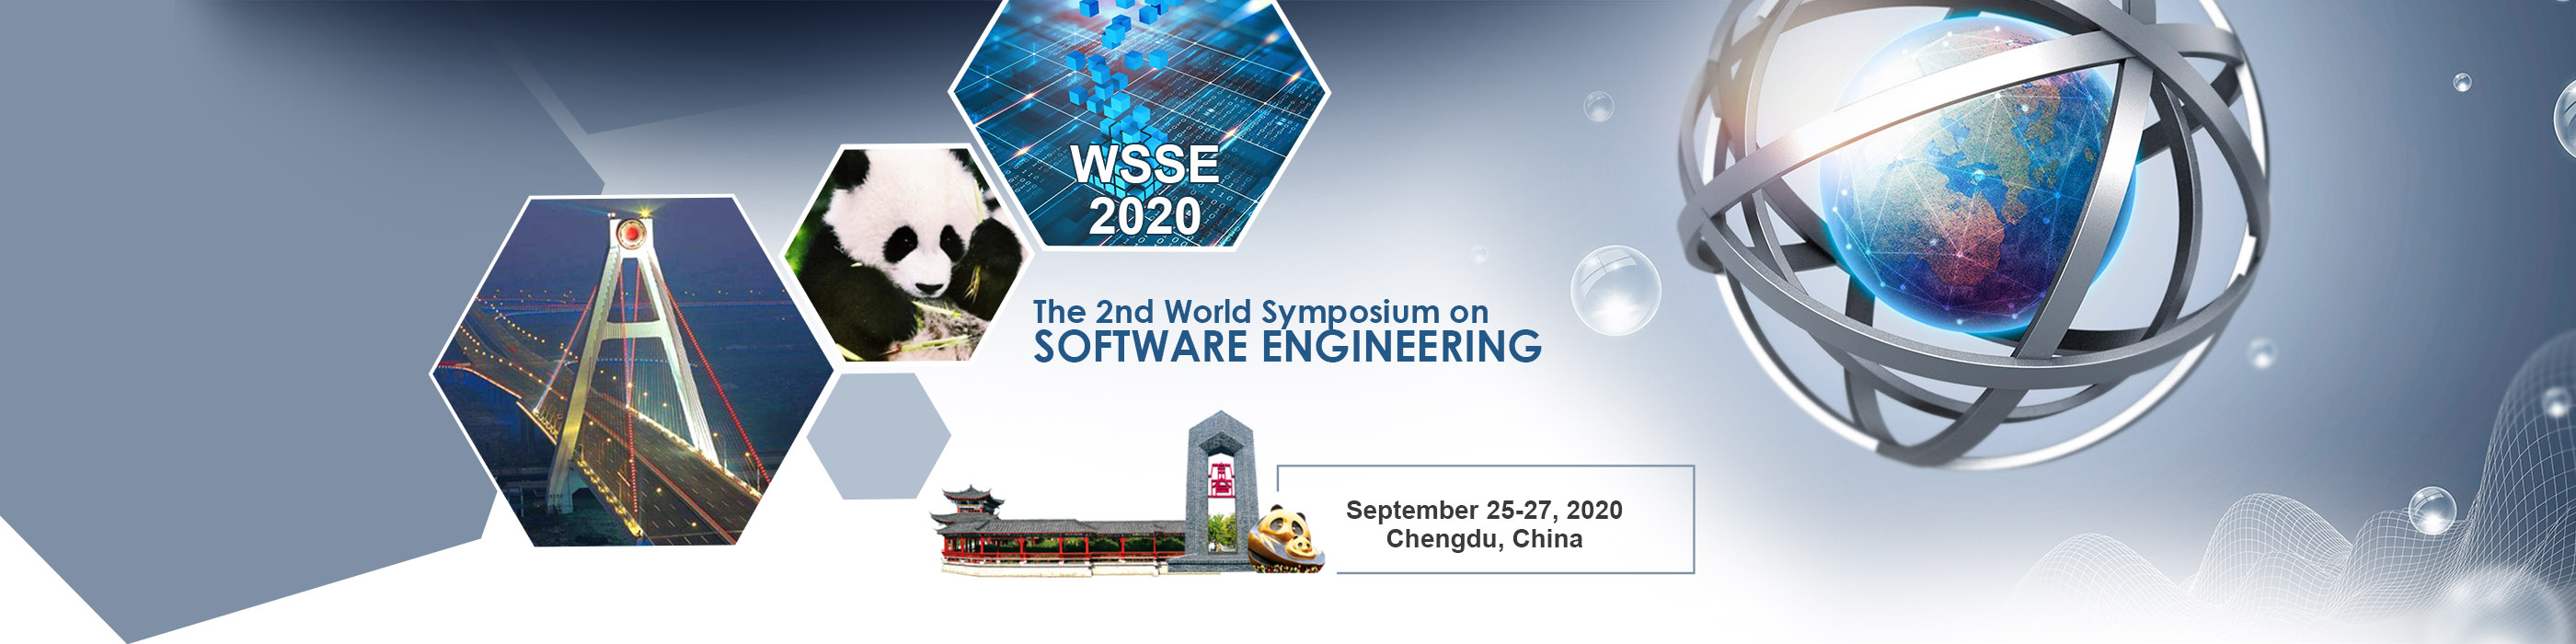 The 2nd World Symposium on Software Engineering (WSSE 2020), Chengdu, Sichuan, China